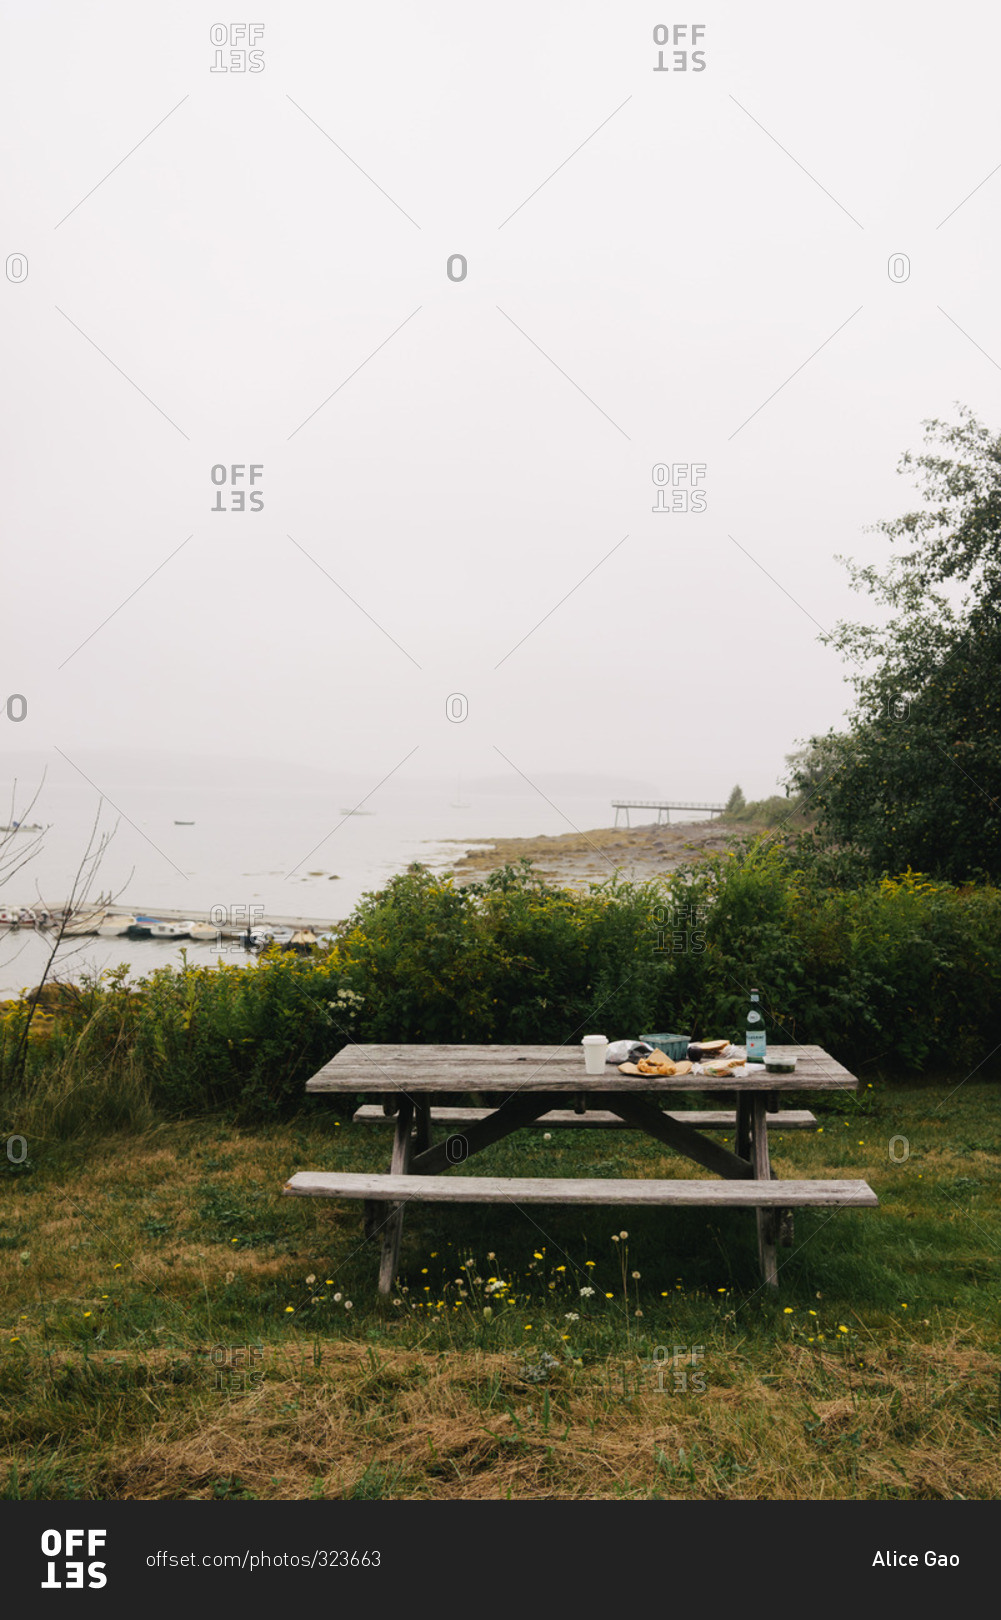 Picnic table near the edge of the shoreline